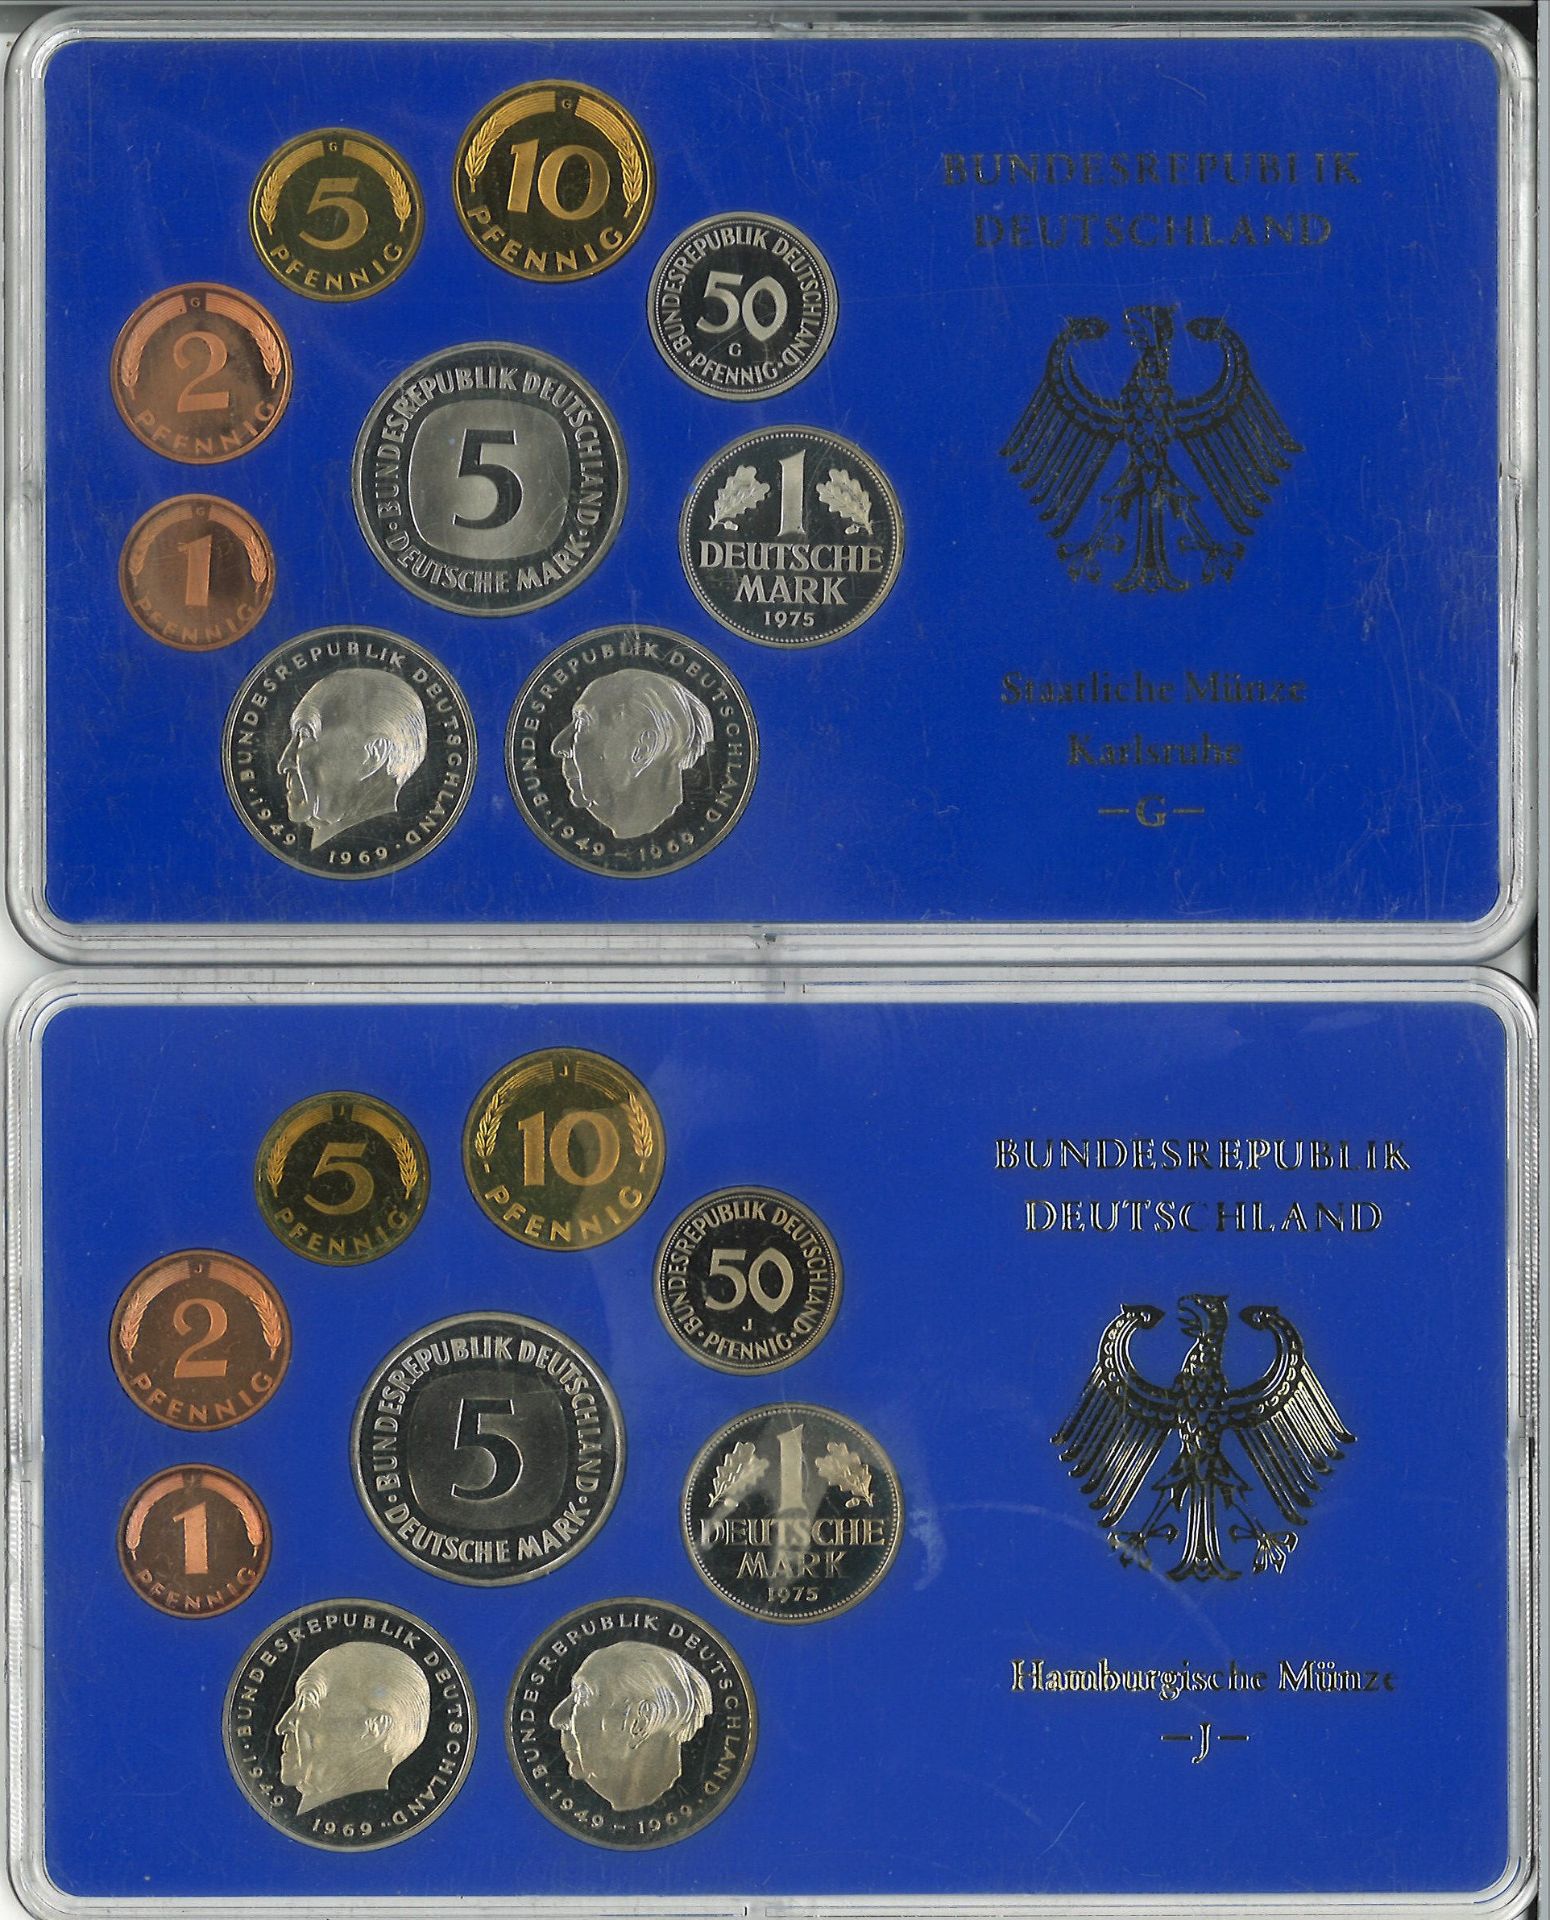 BRD Münzsets Jahrgang 1975, D, F, G und J. Im Original Blister. - Image 4 of 4